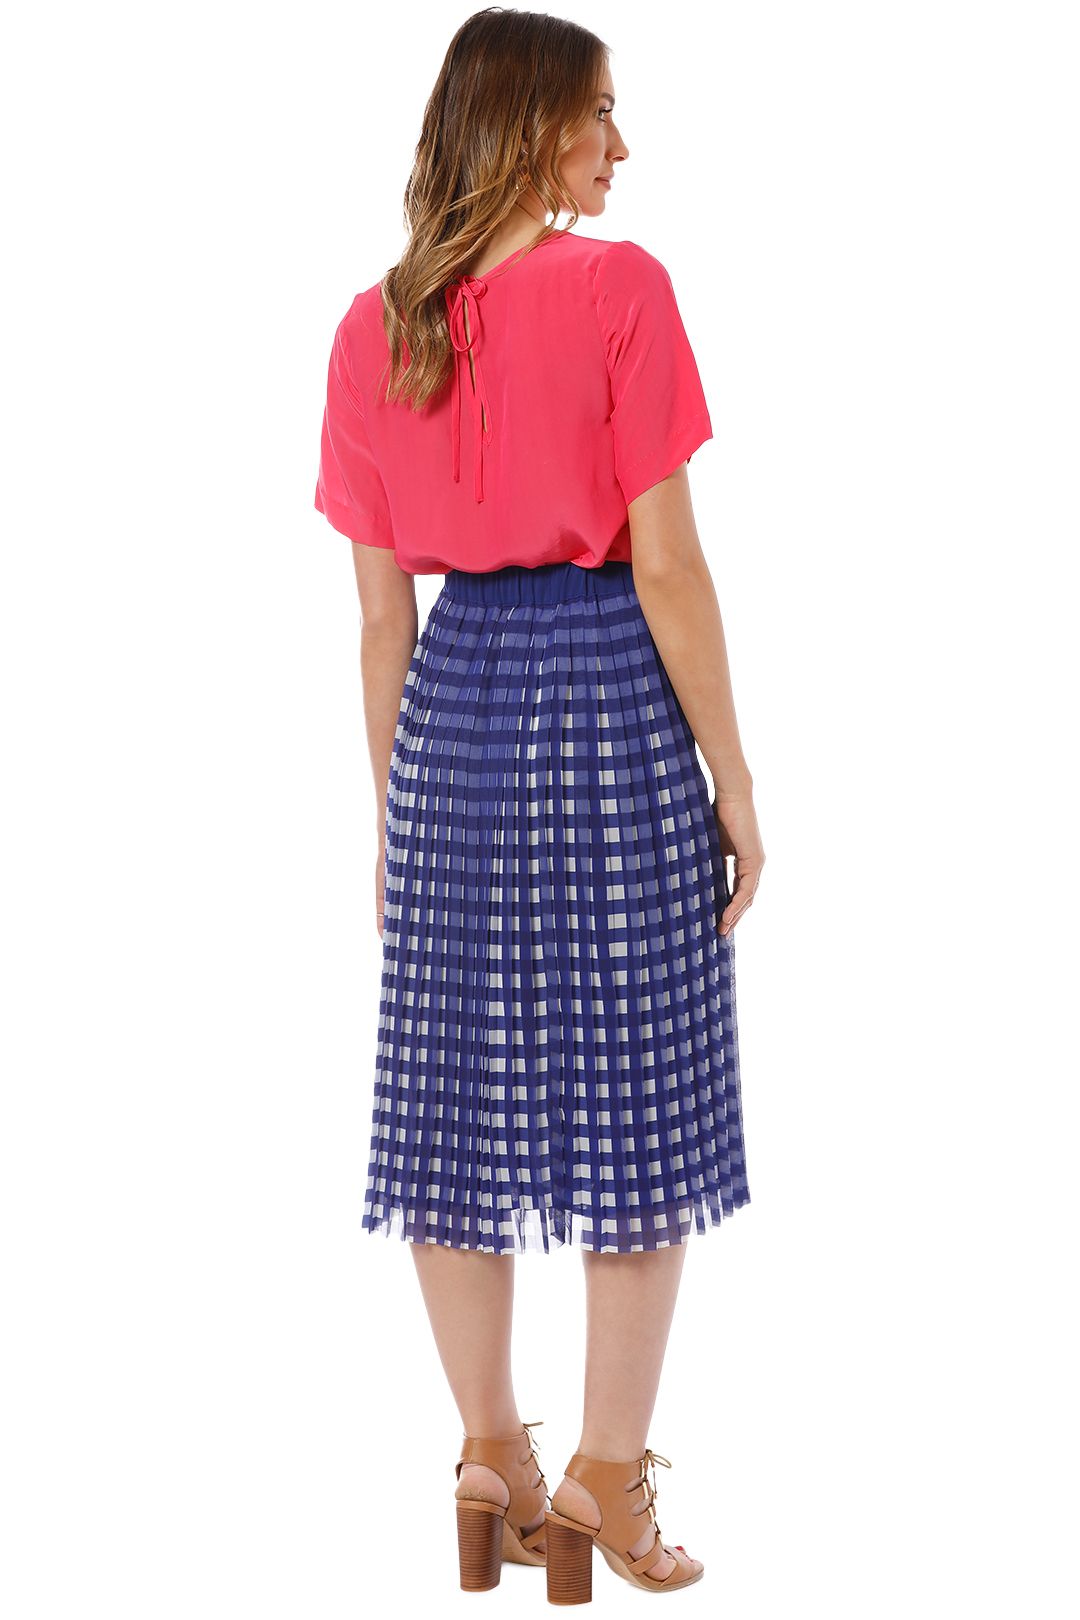 Gorman - Kinetic Pleat Skirt - Blue - Back